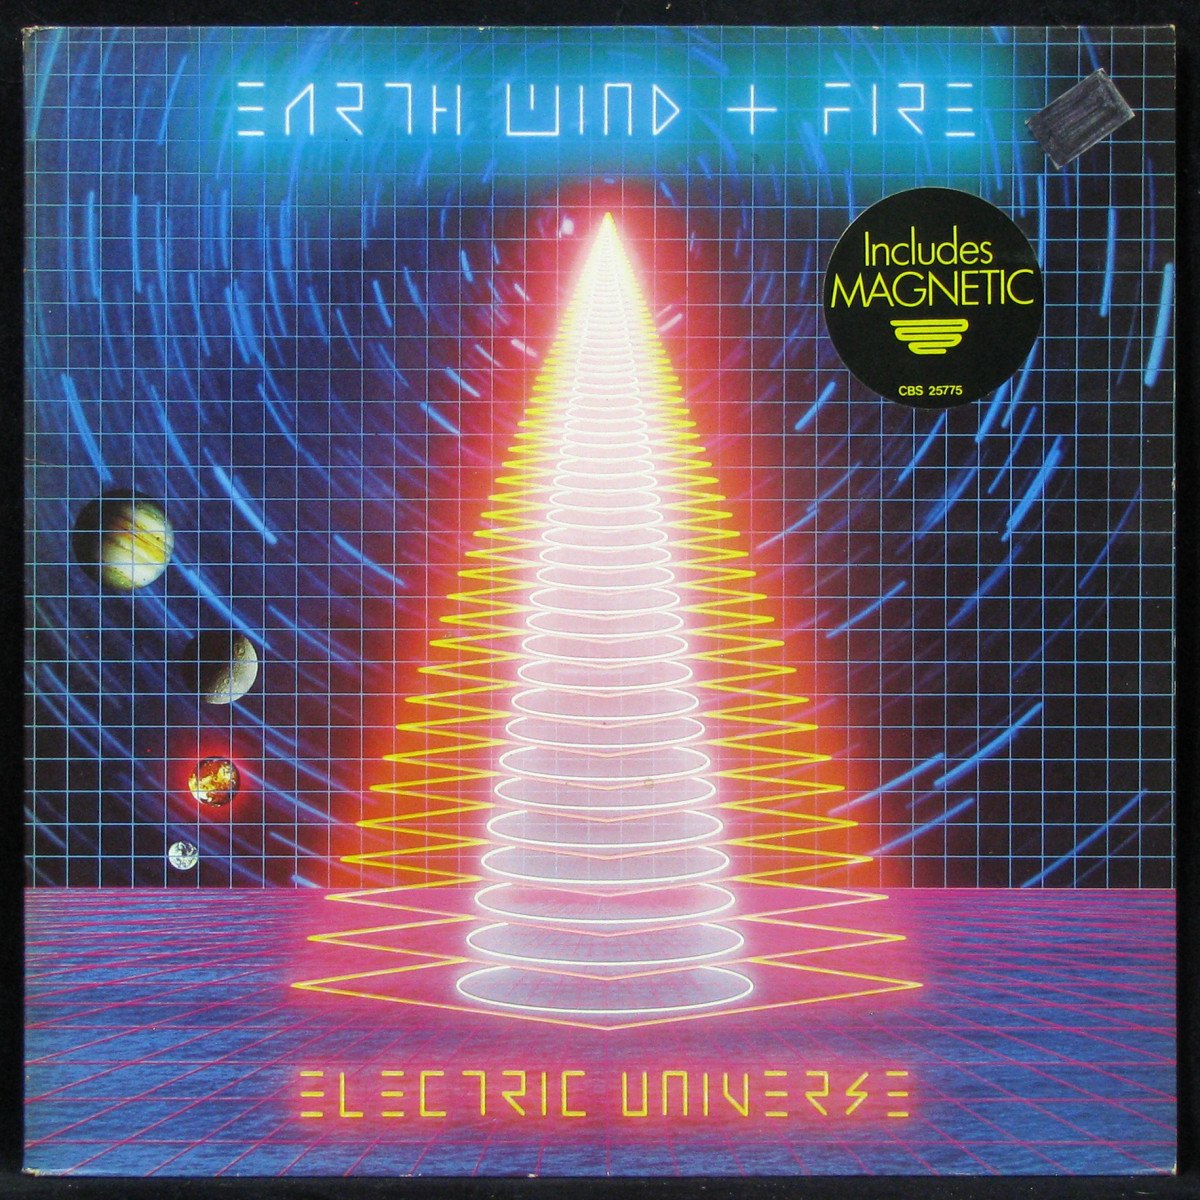 Купить виниловую пластинку Earth, Wind & Fire - Electric Universe, 1983 ...